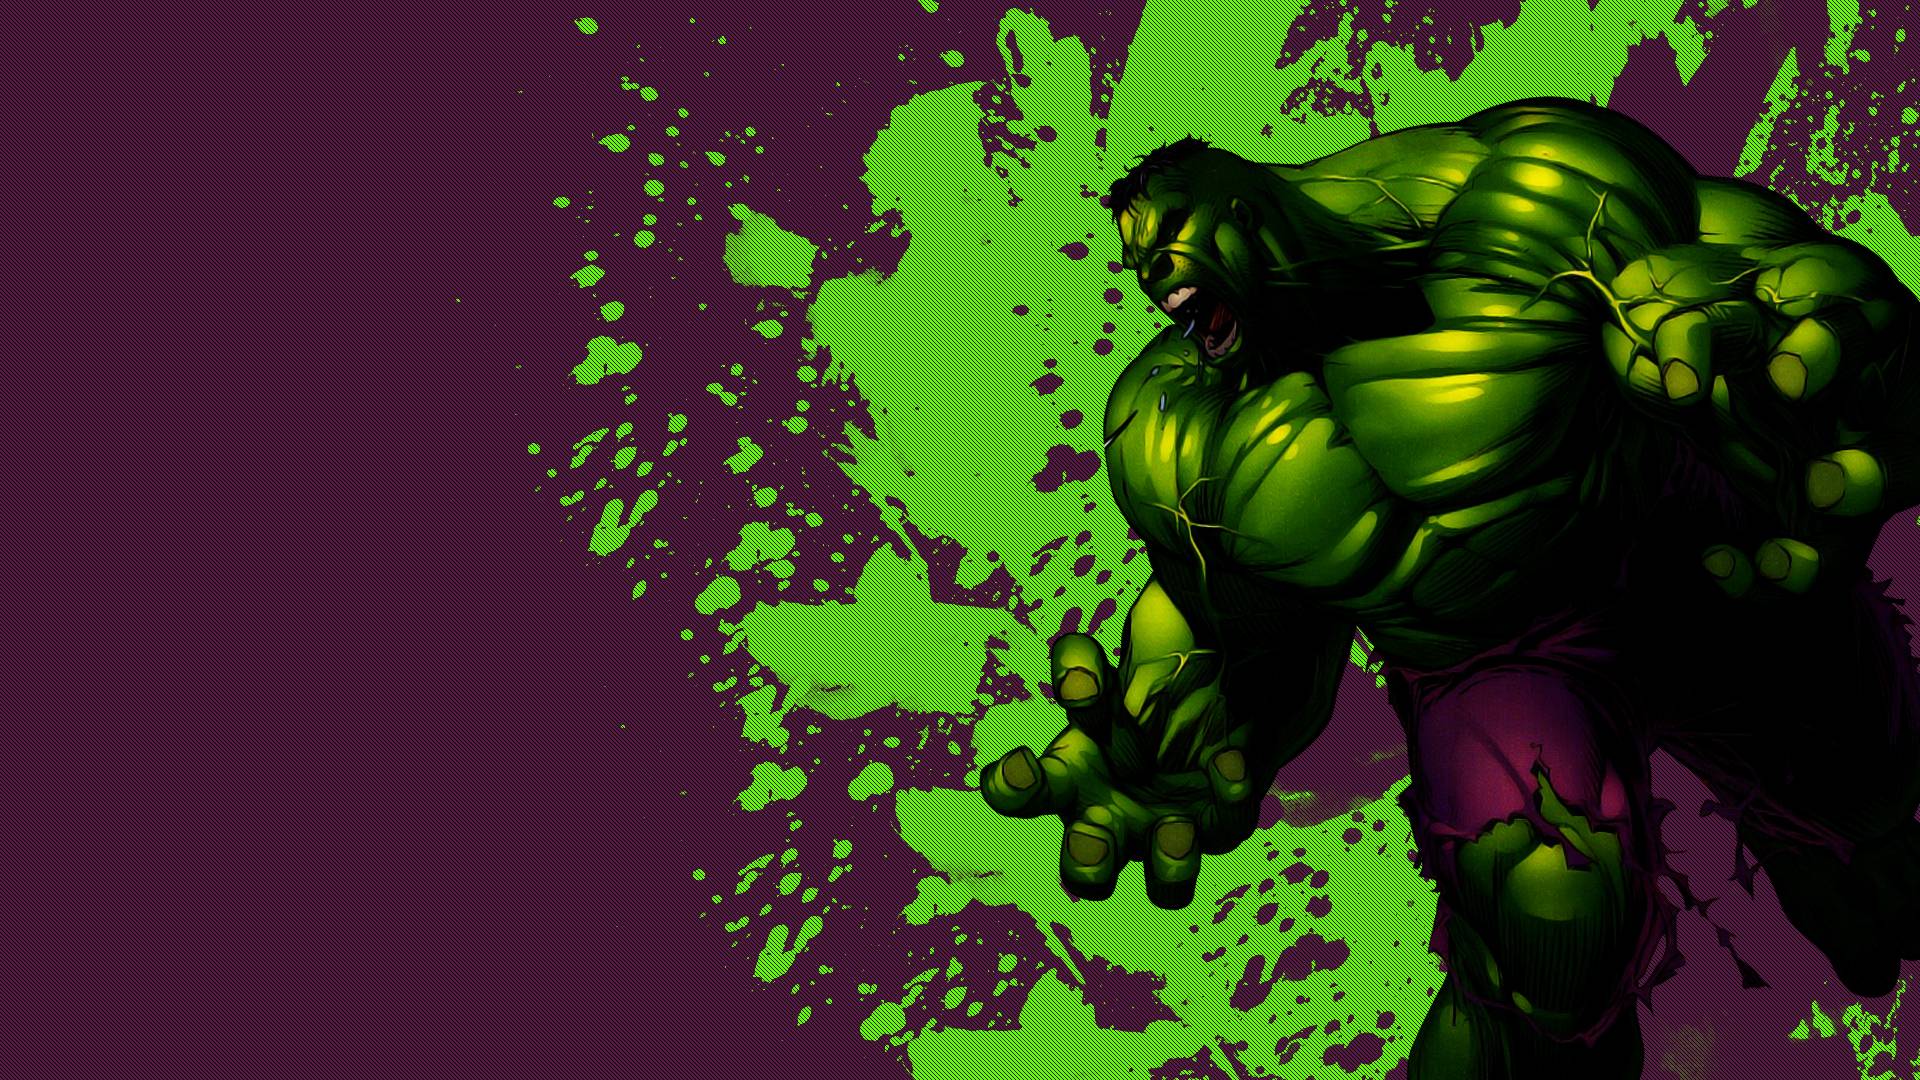 The Hulk Wallpaper